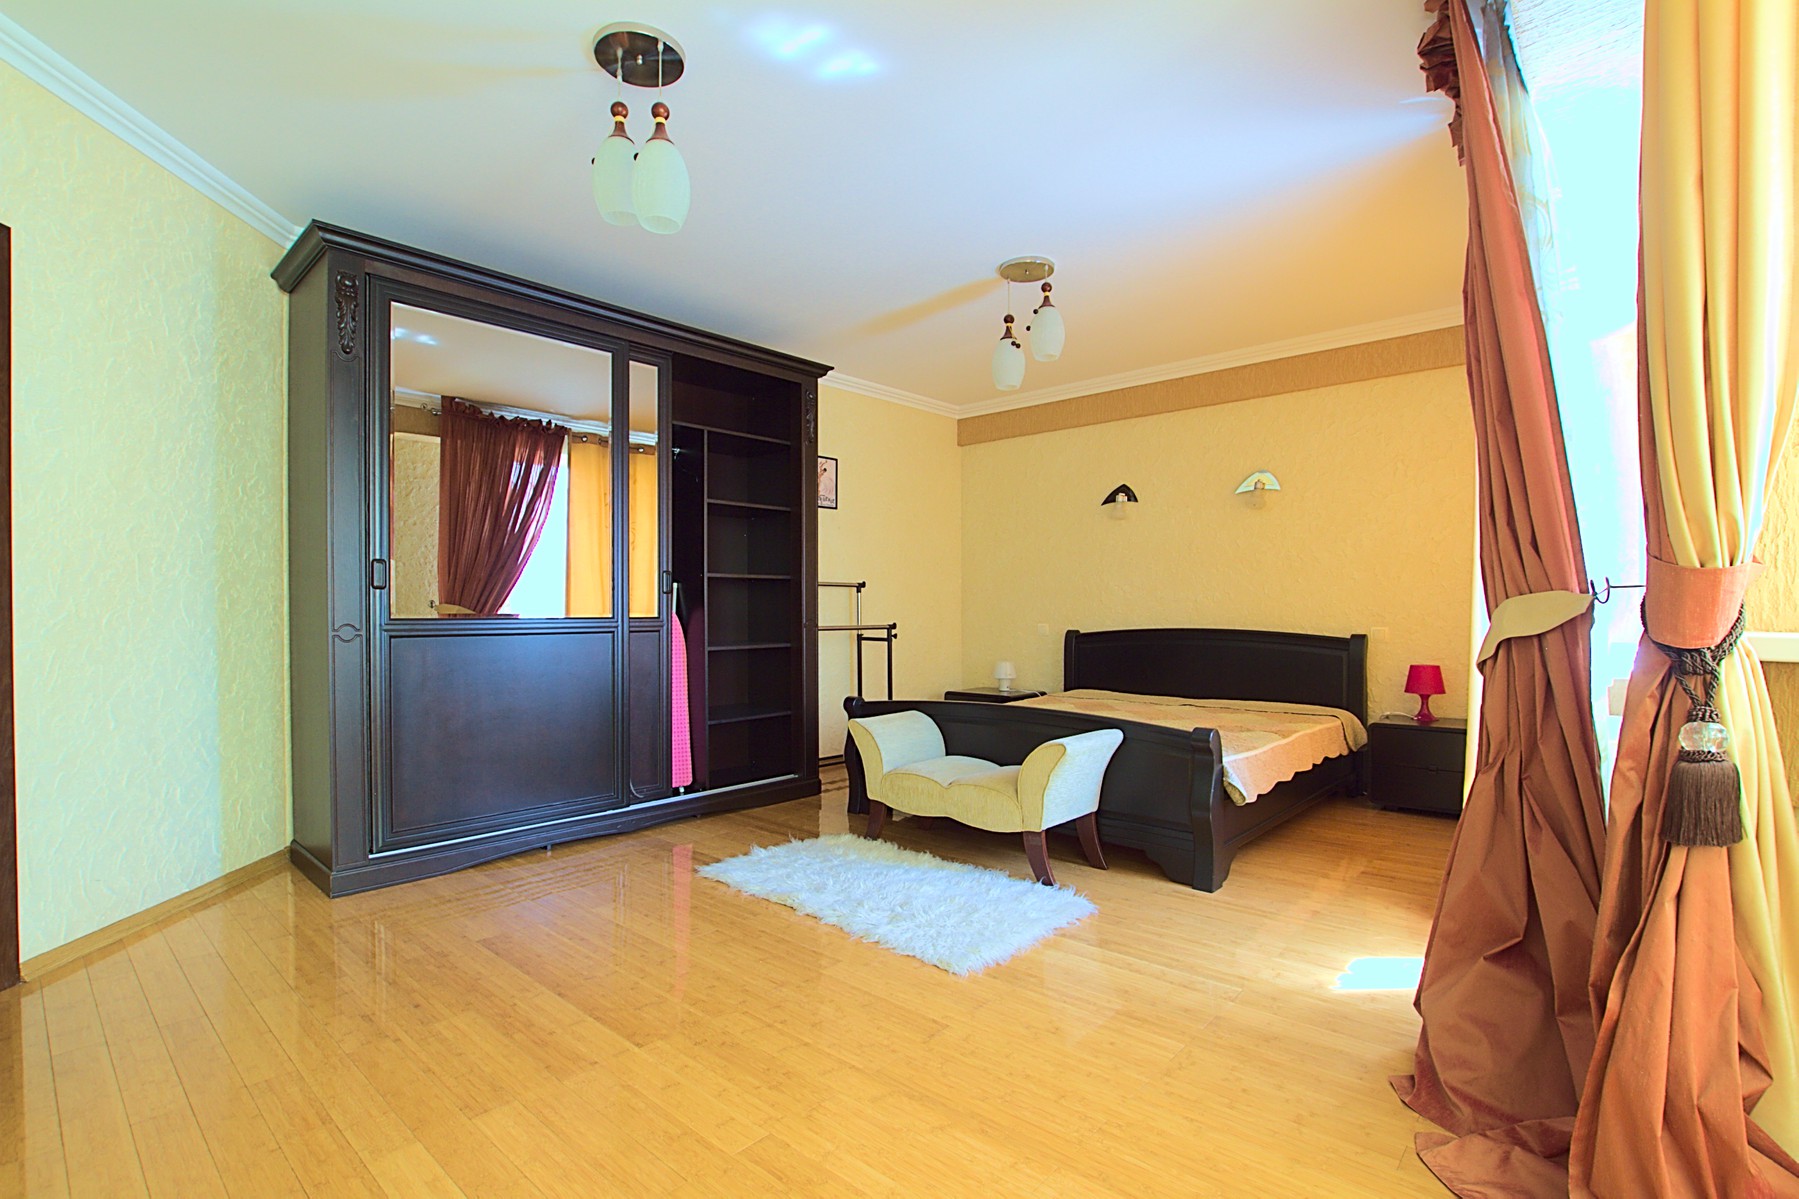 Deluxe Center Apartment это квартира в аренду в Кишиневе имеющая 3 комнаты в аренду в Кишиневе - Chisinau, Moldova